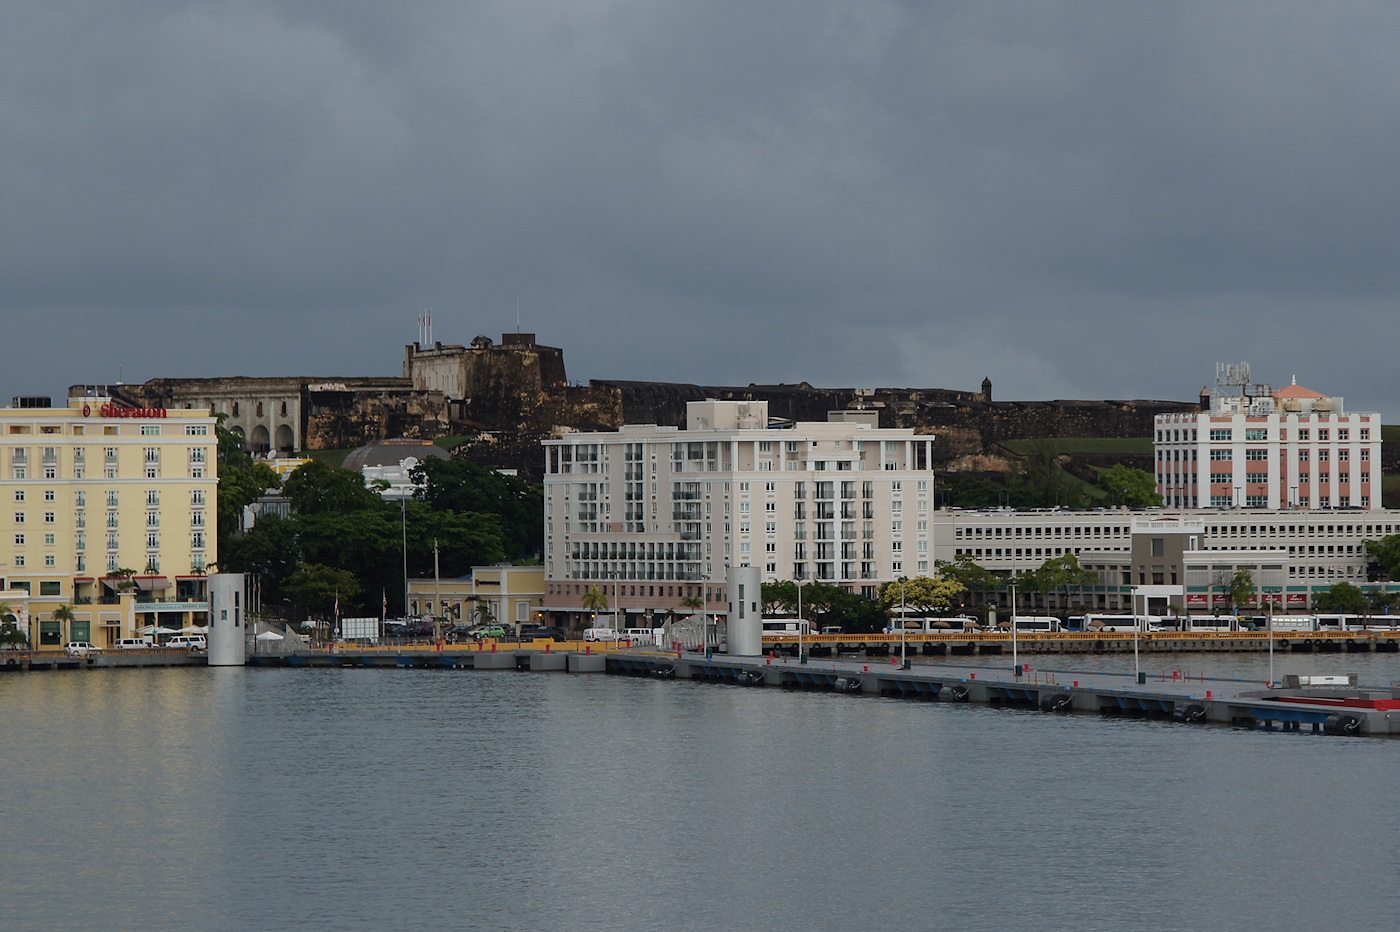 San Juans port and dock area